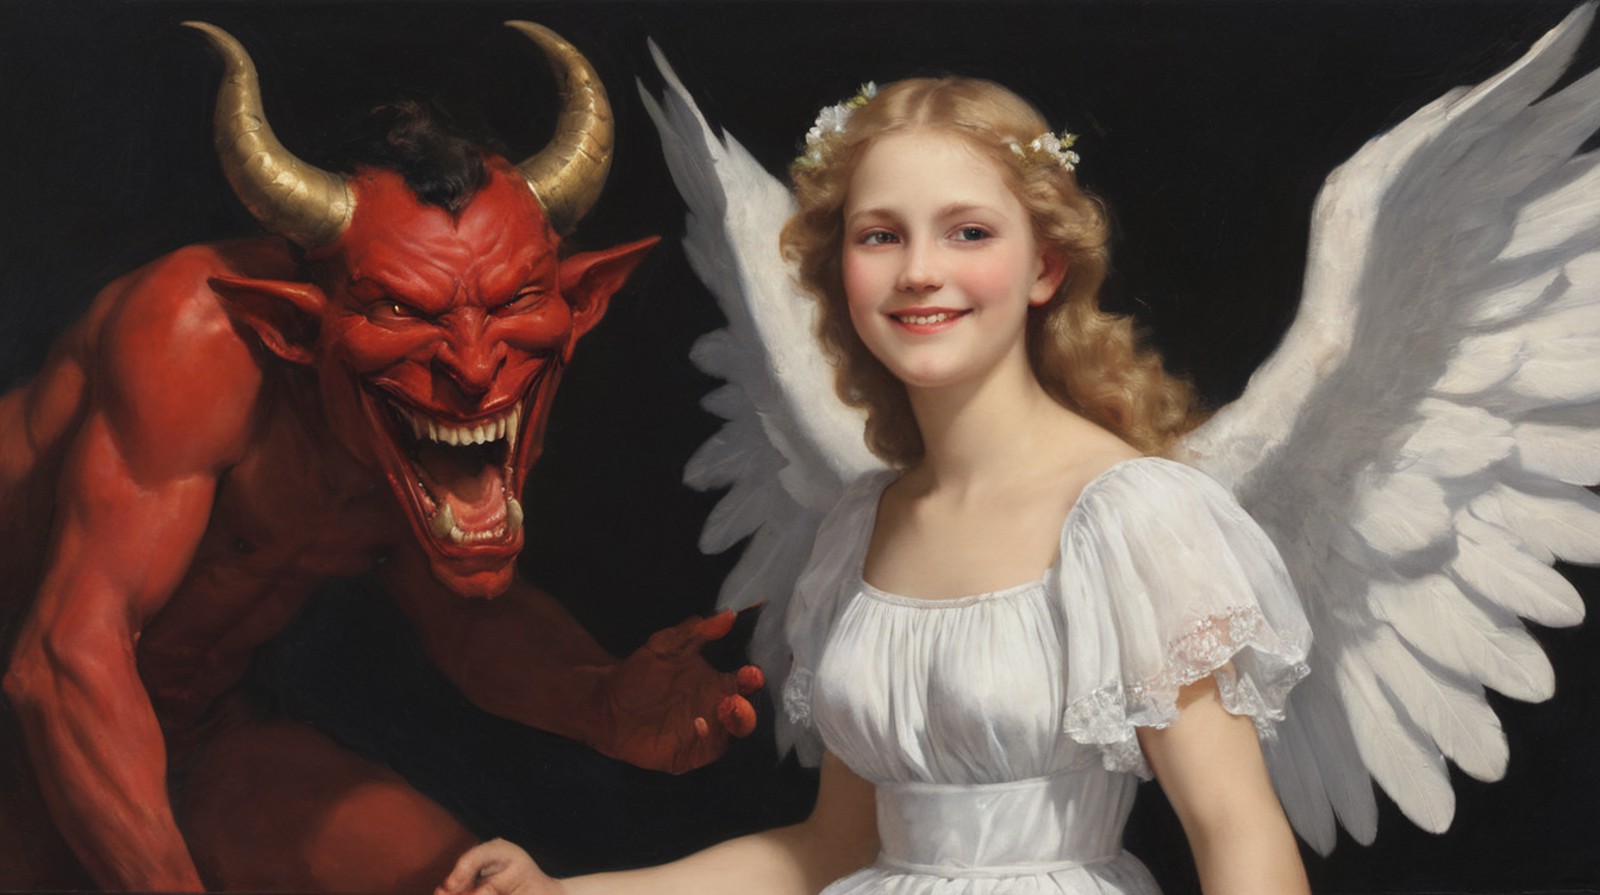 professional oil painting devil and an angel shaking hands,   <lora:ClassipeintXL1.9:1>
BREAK
grinning devil, sparkling ey...